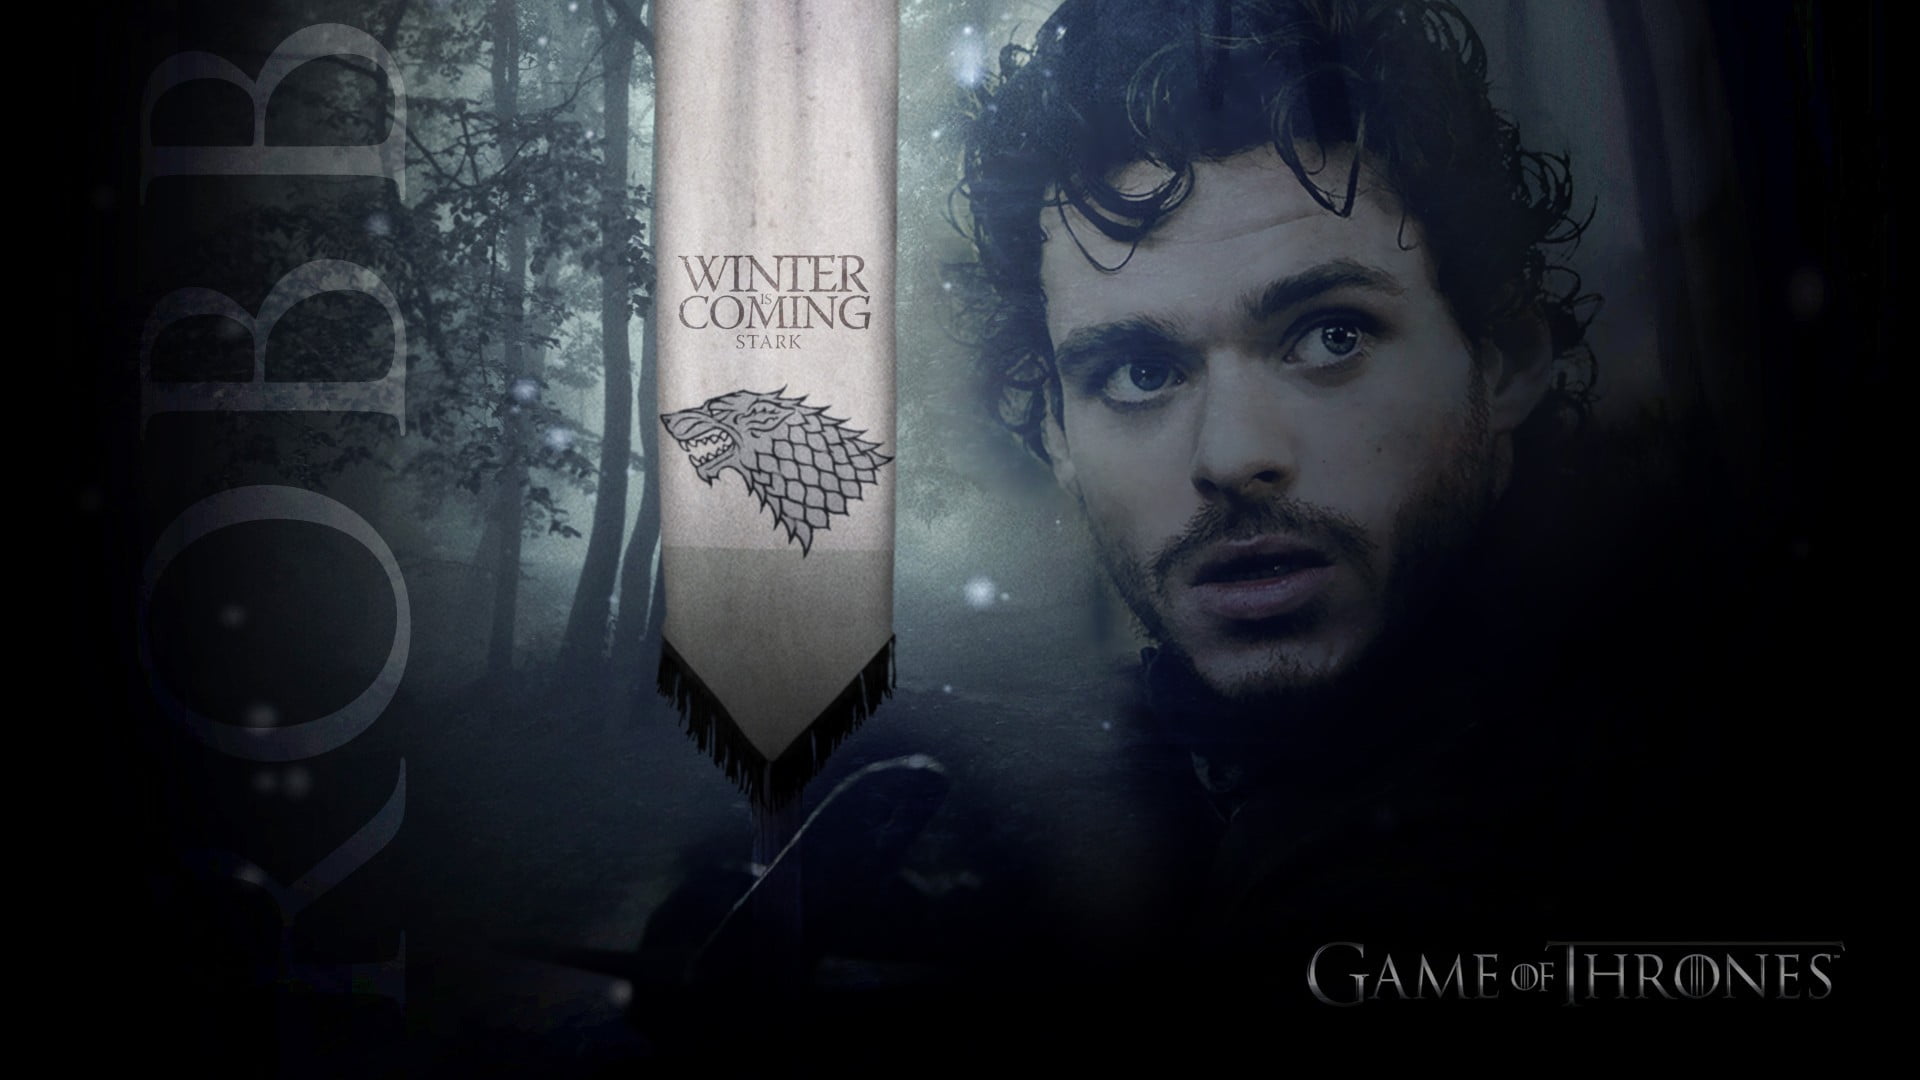 Game of Thrones Winter is Coming digital wallpaper, Robb Stark